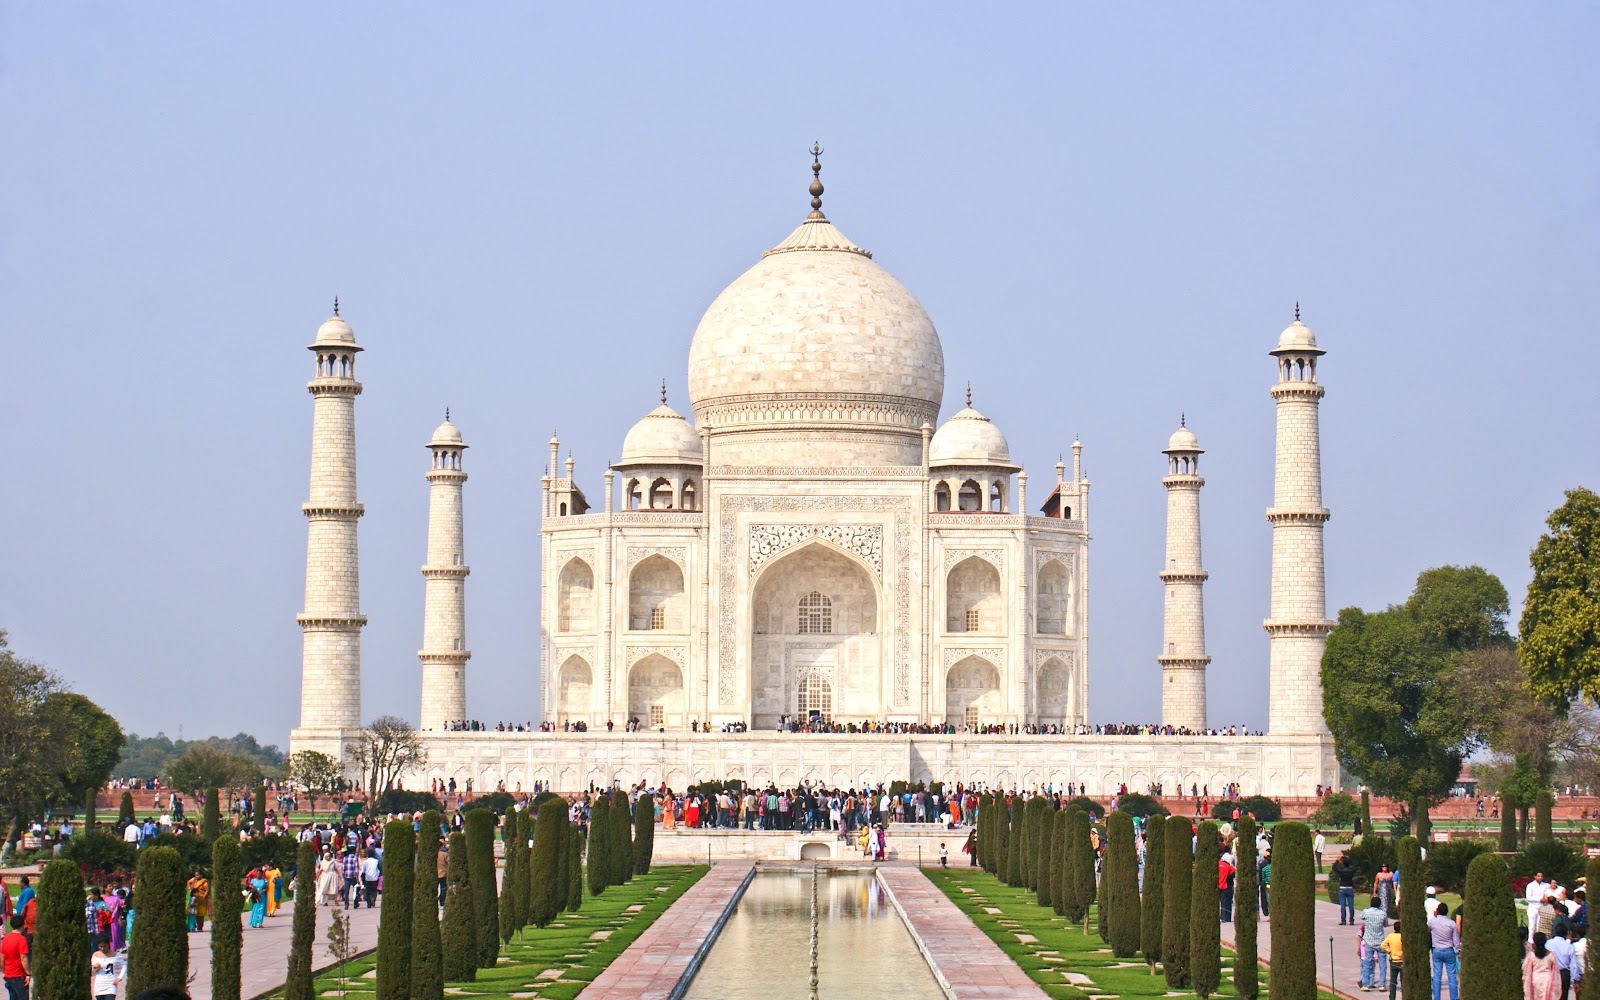 The Characteristics Of The Taj Mahal Of